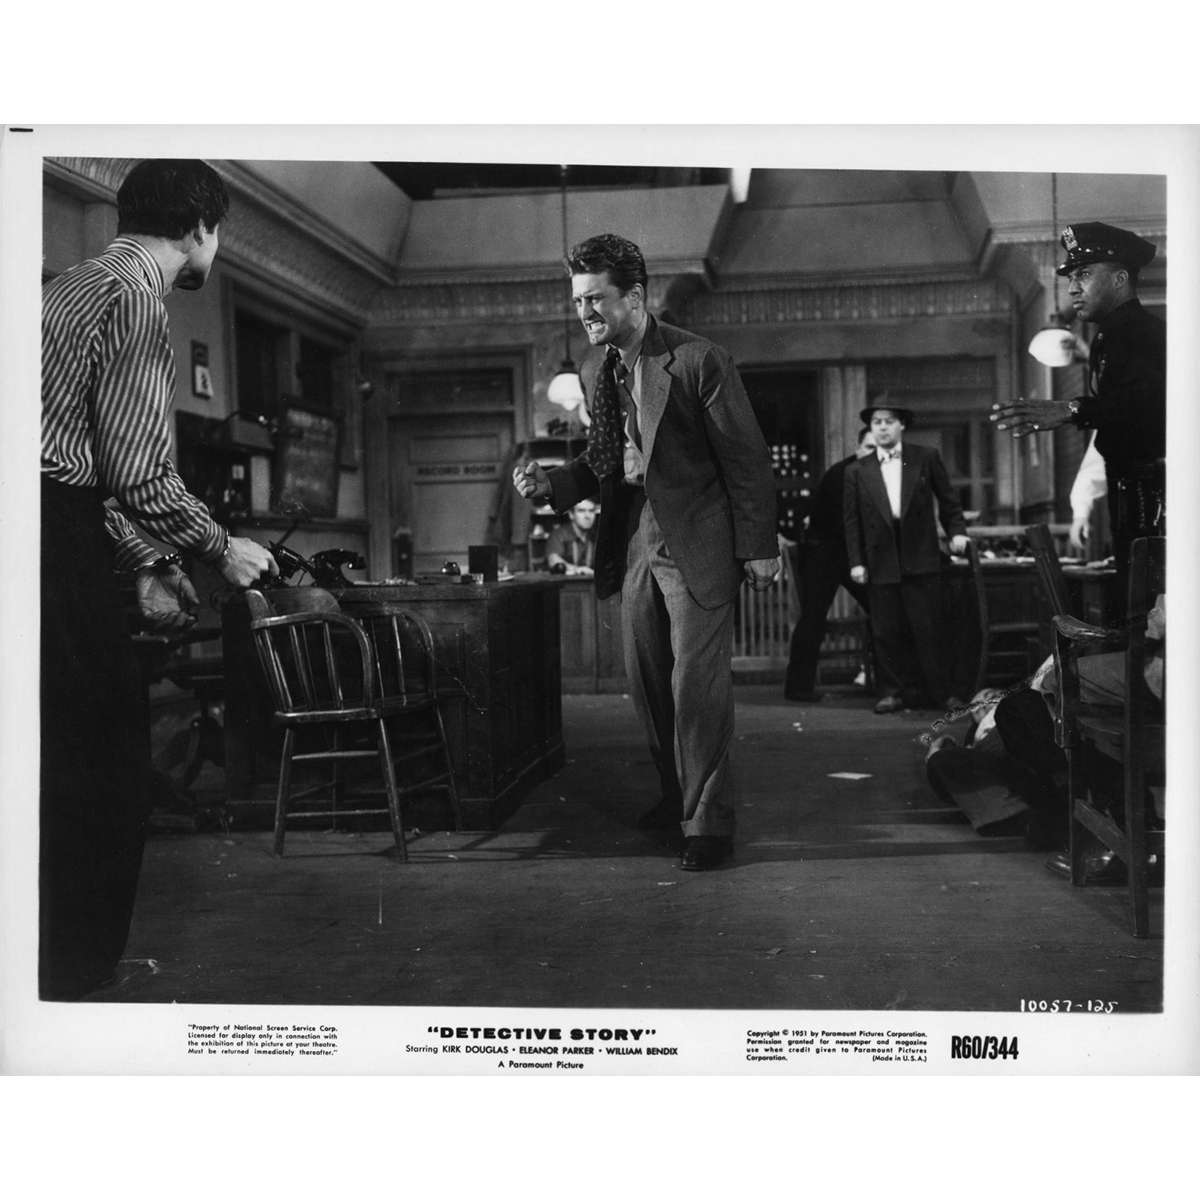 DETECTIVE STORY Movie Still 8x10 in. USA - R1960 - William Wyler, Kirk Douglas1200 x 1200